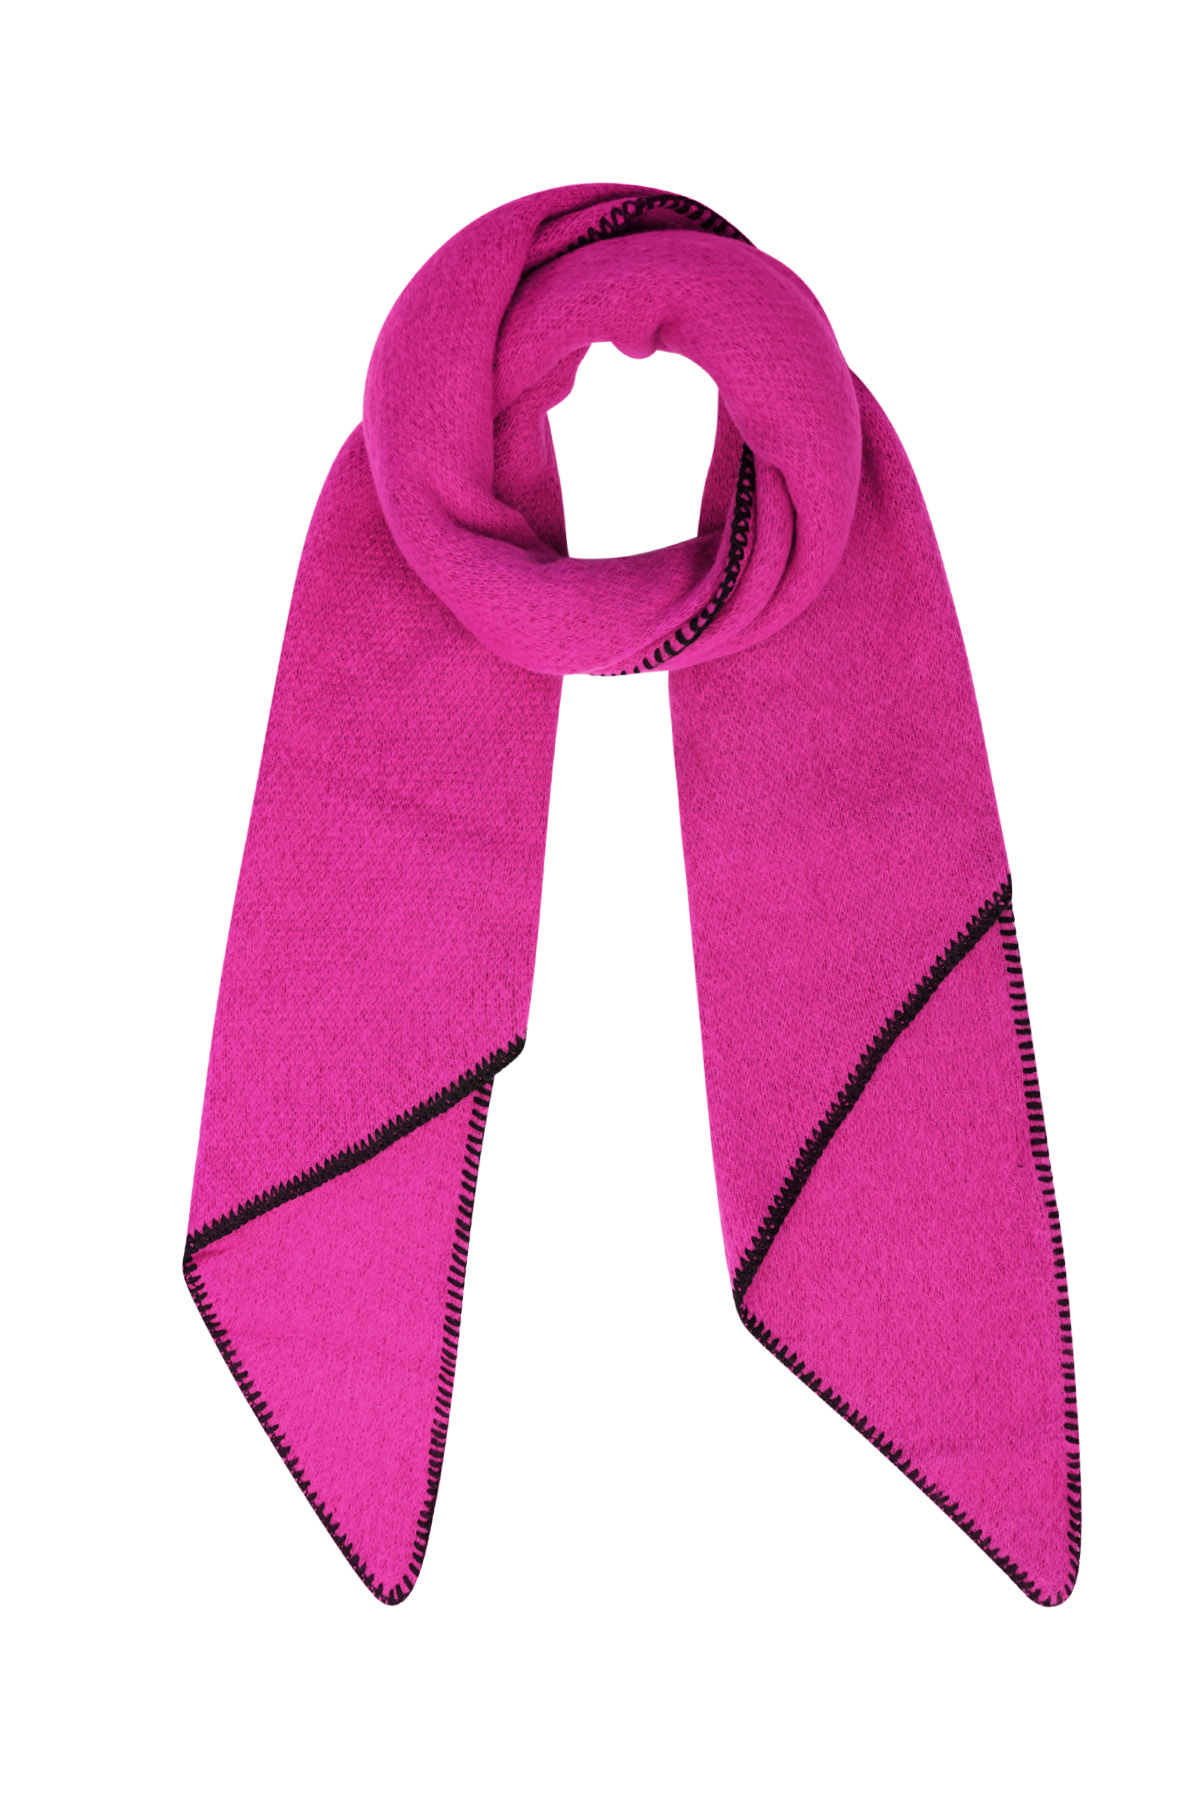 Winter scarf single-colored with black stitching - fuchsia 